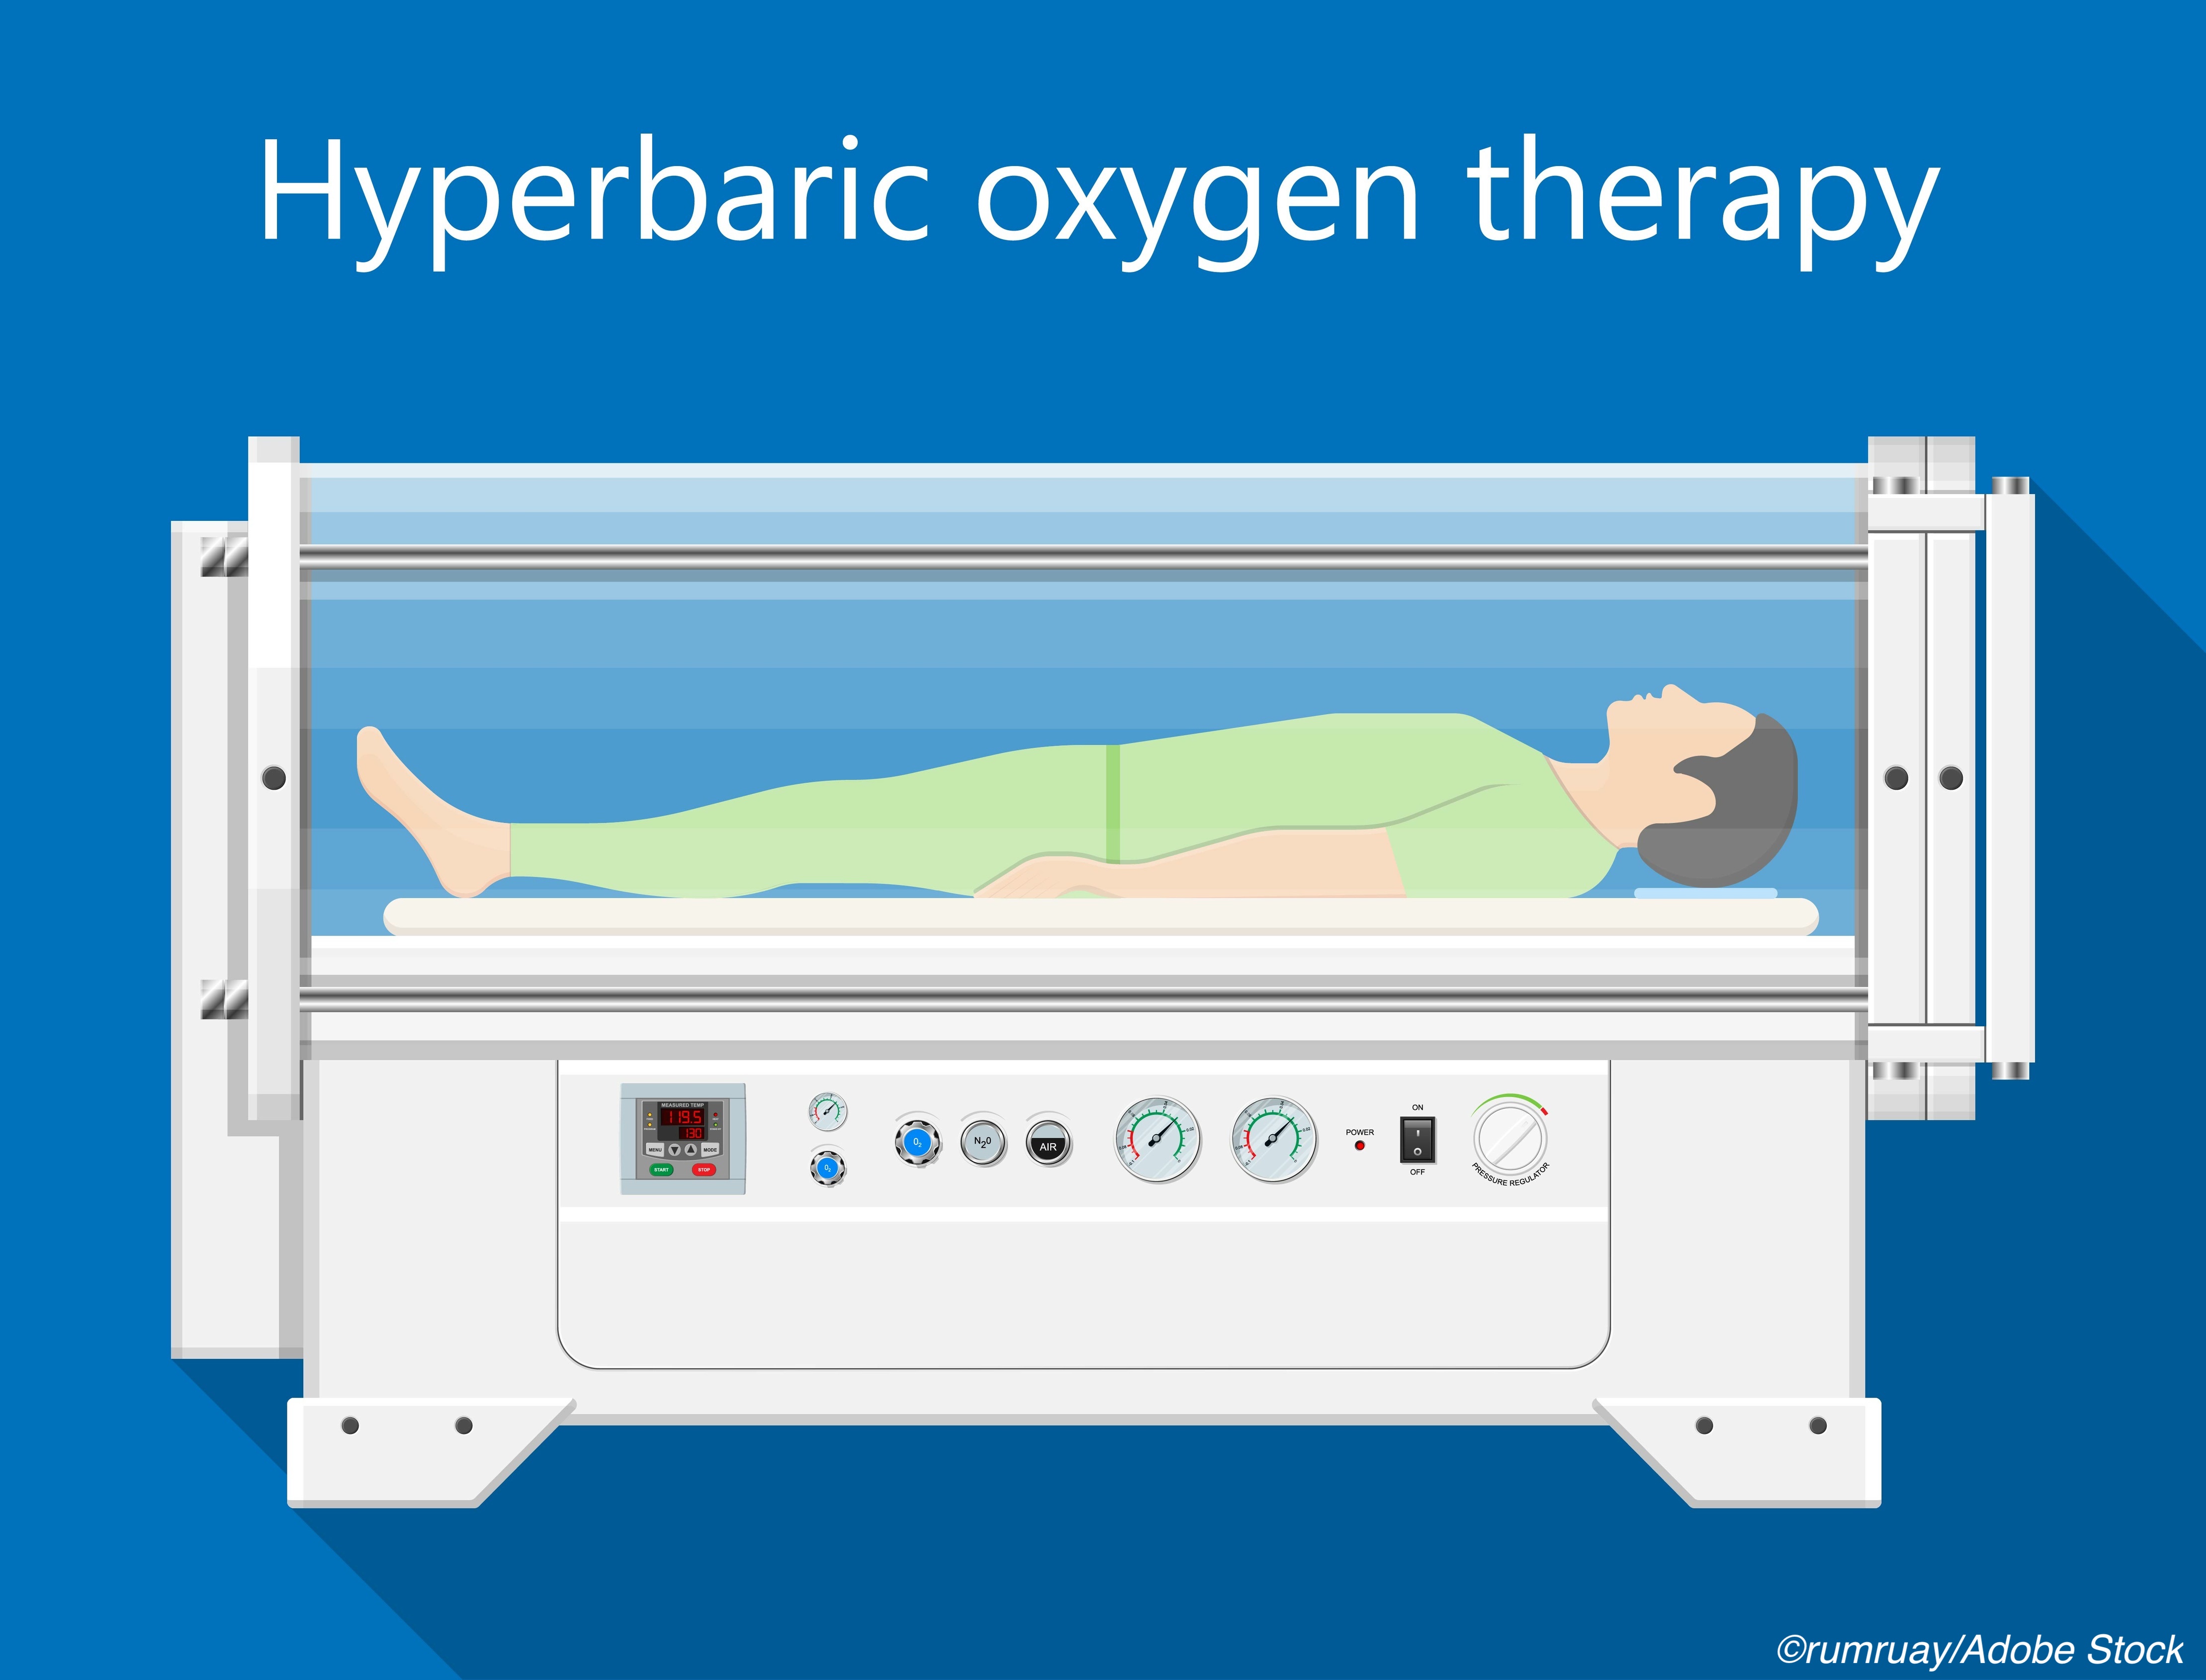 Sudden Sensorineural Hearing Loss: Can Hyperbaric Oxygen Tx Make a Difference?